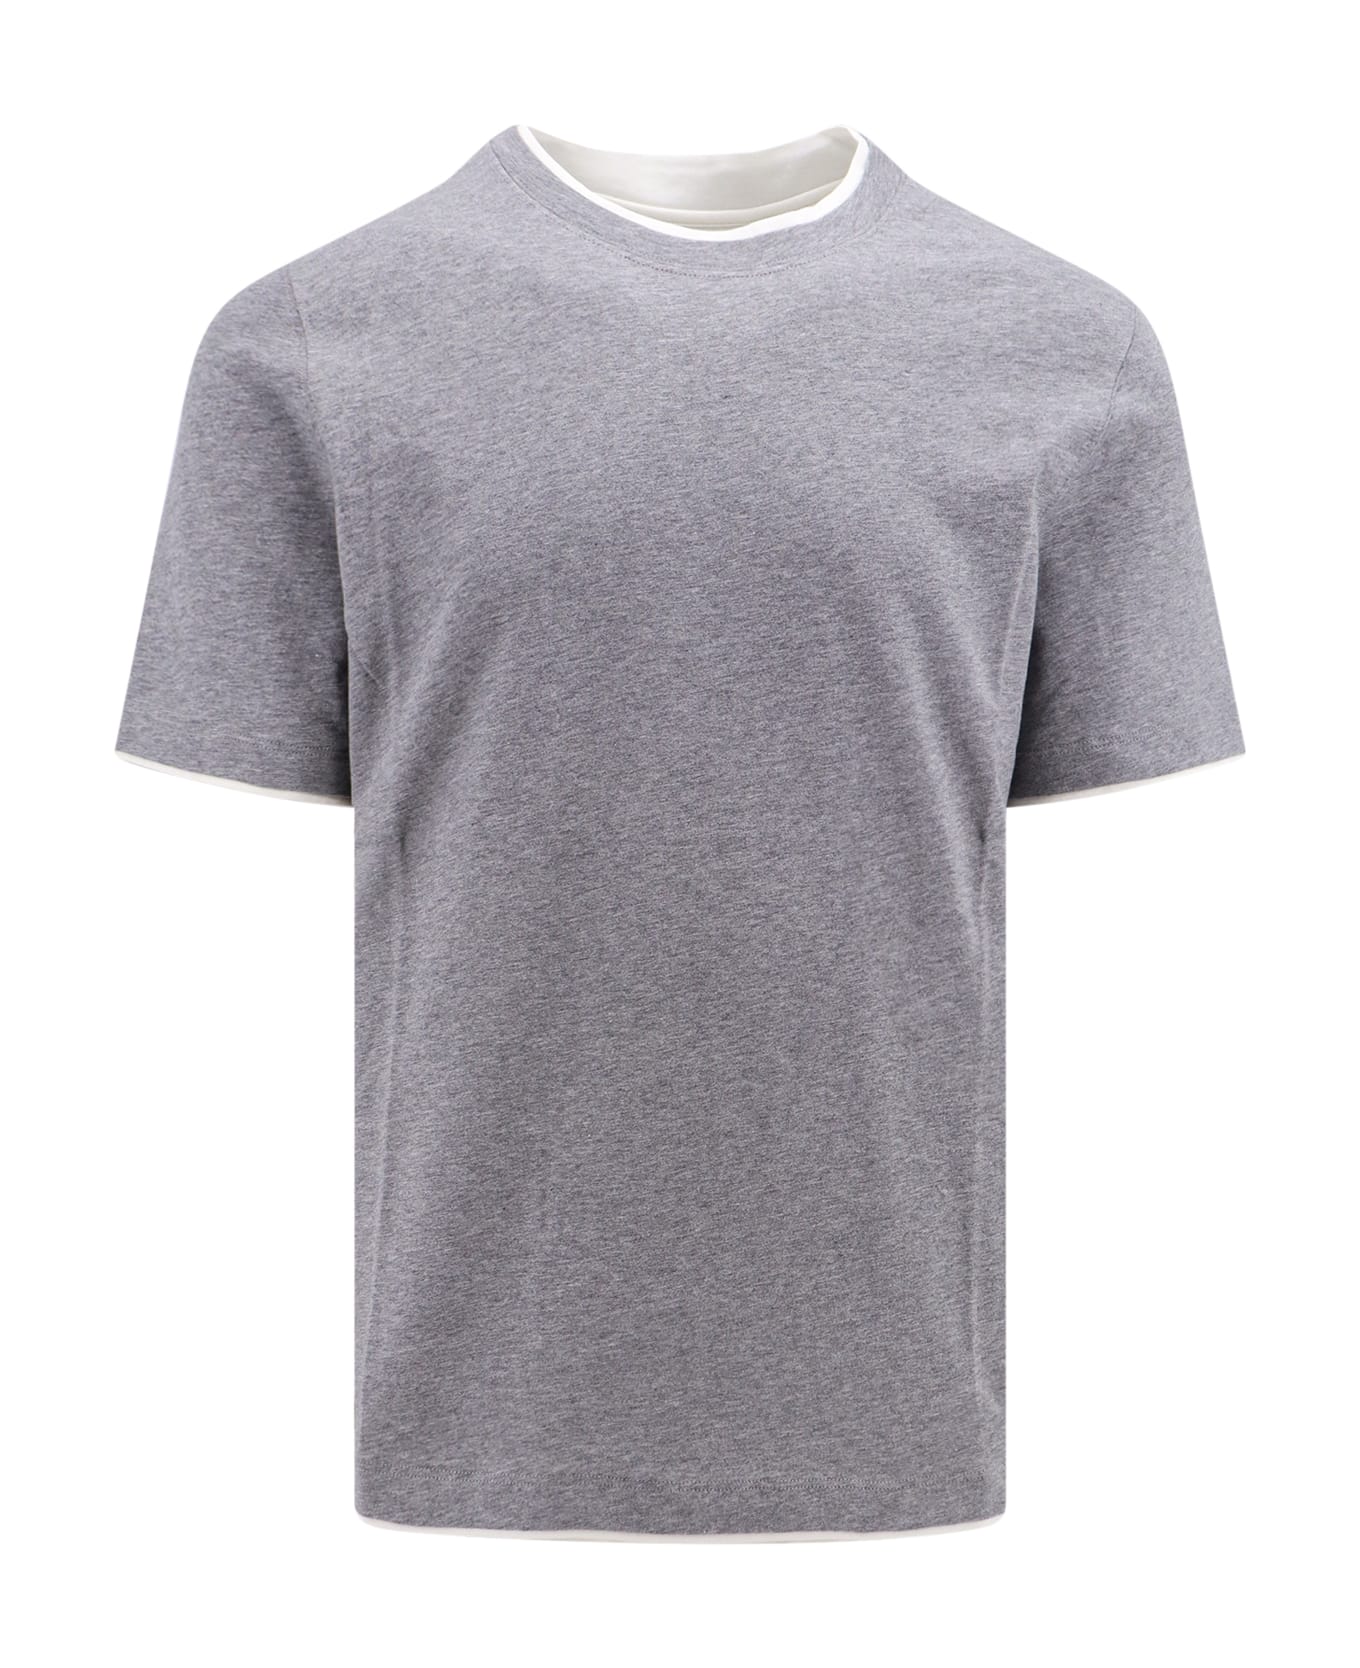 Brunello Cucinelli Contrasting Edges Grey T-shirt - Grey